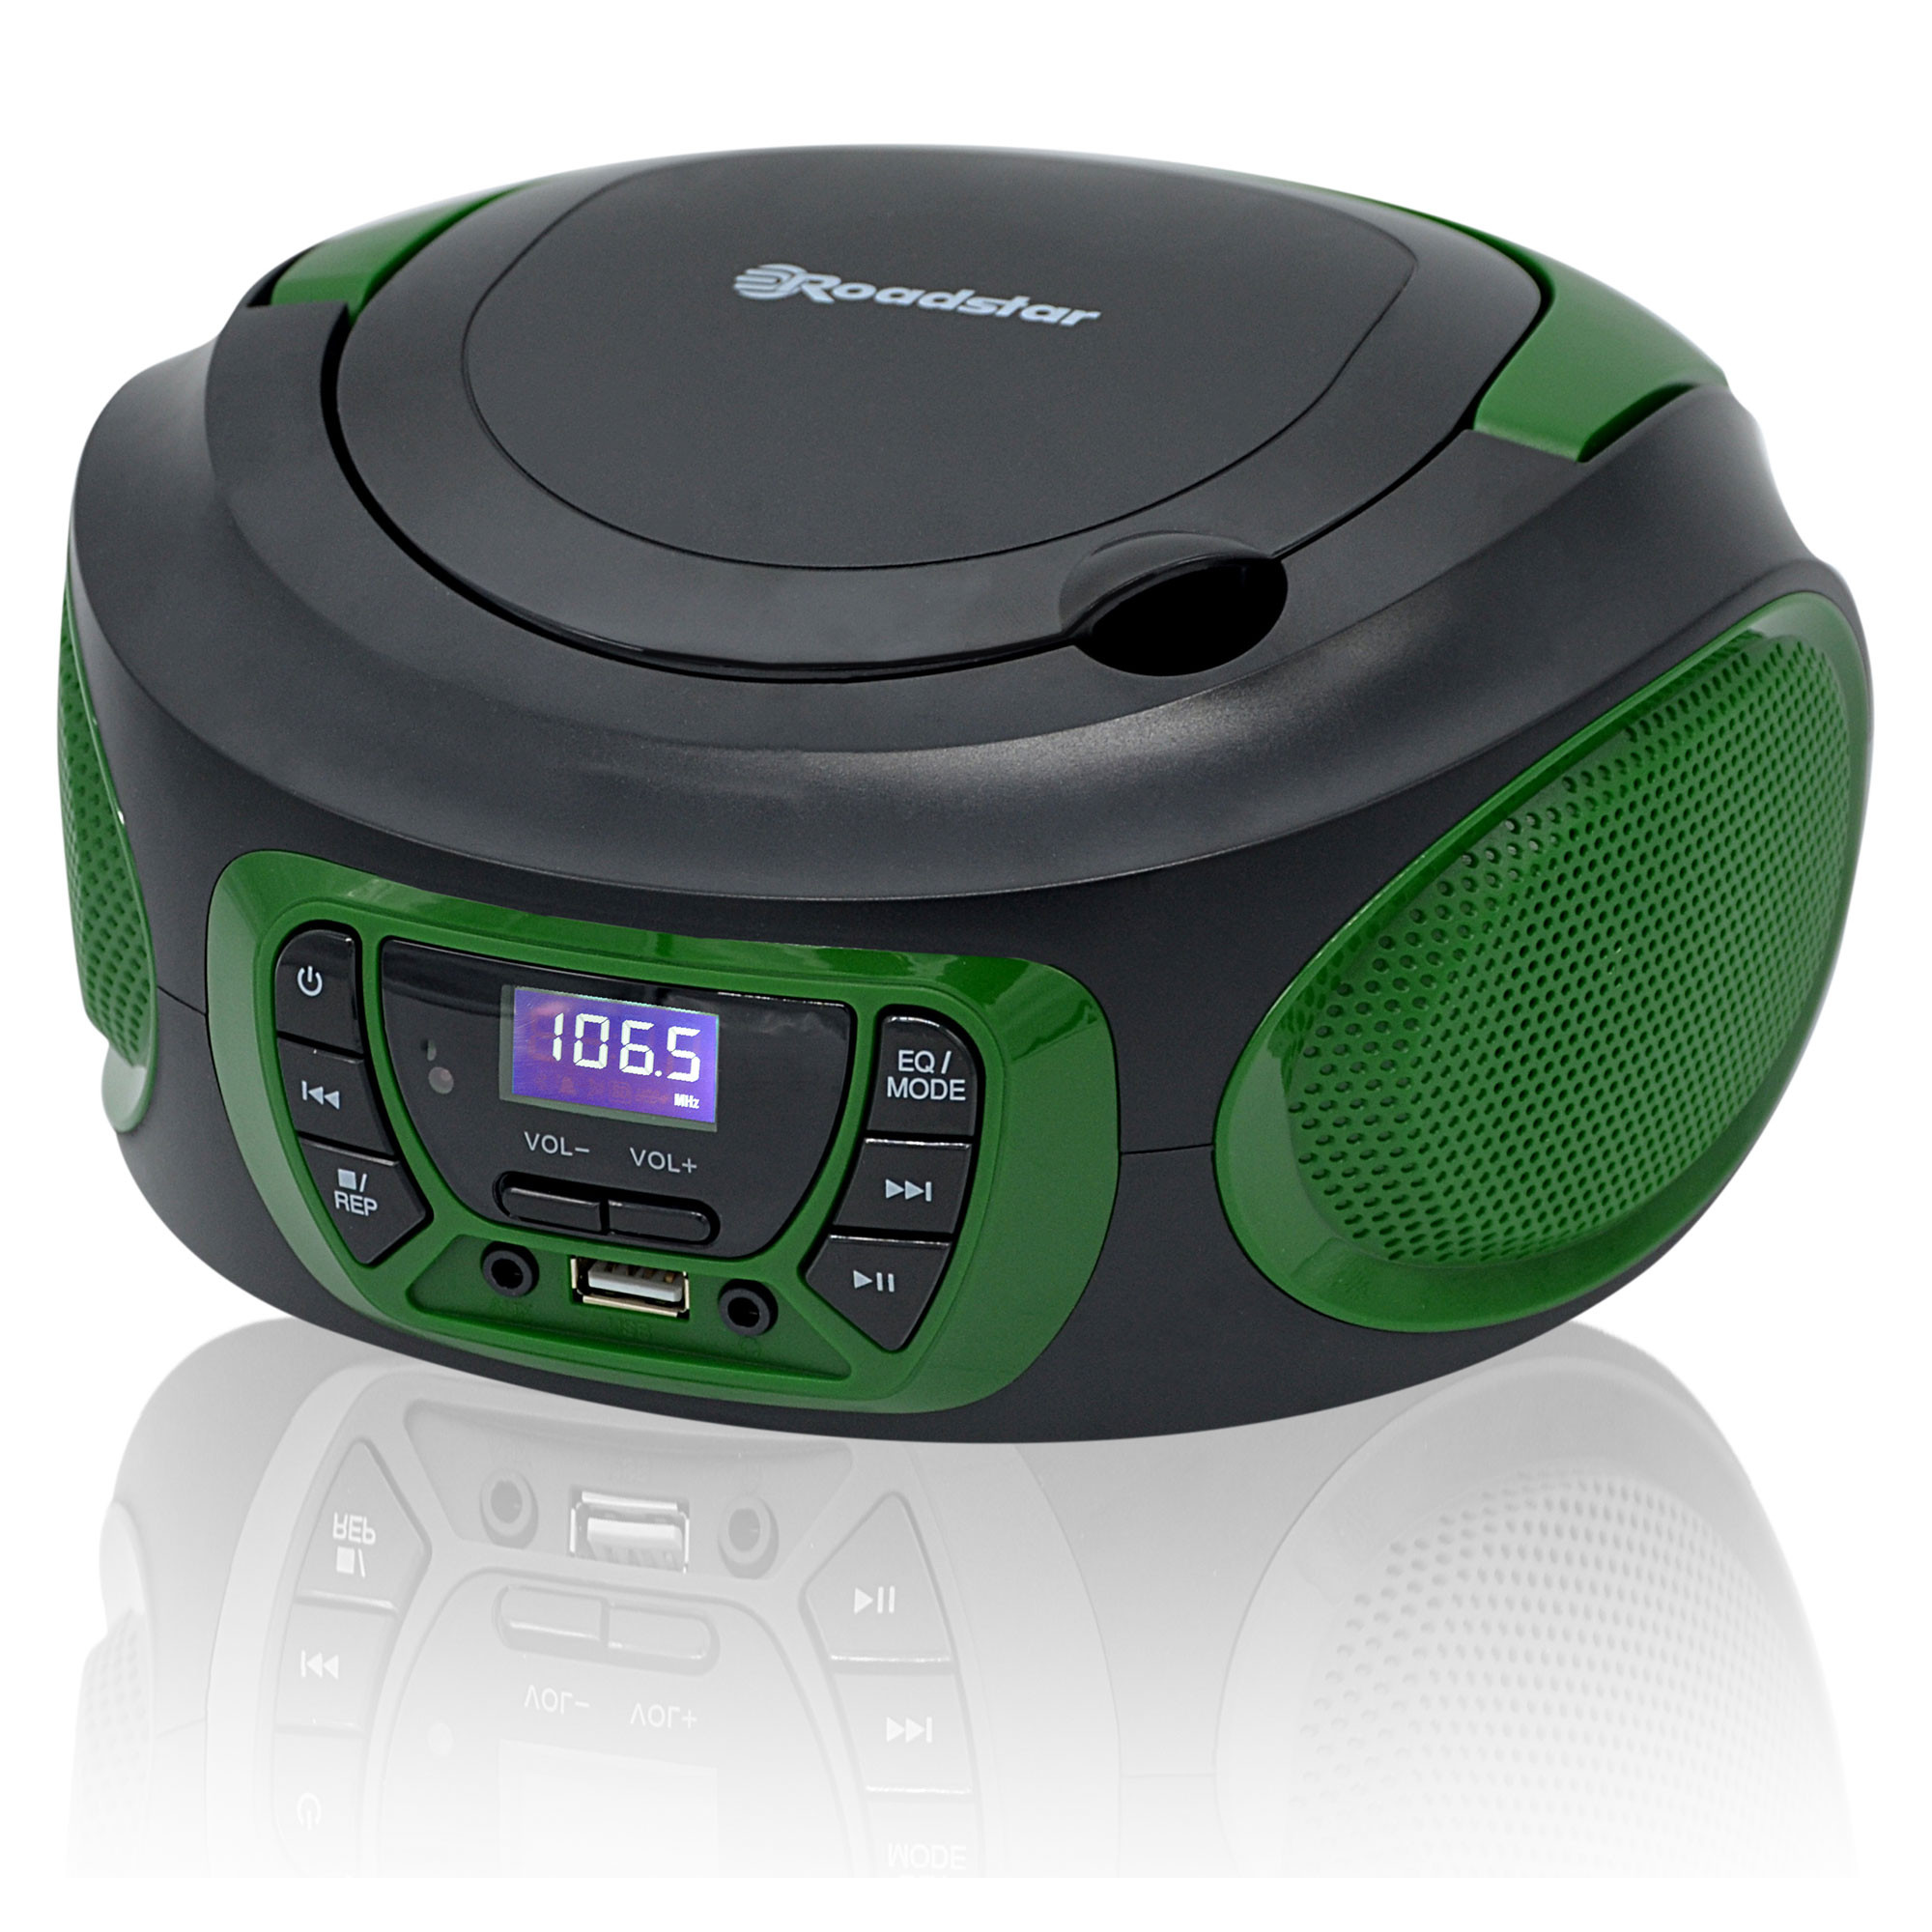 Roadstar IR-390D+BT/WH Radio Portátil Bluetooth/WiFi Blanca